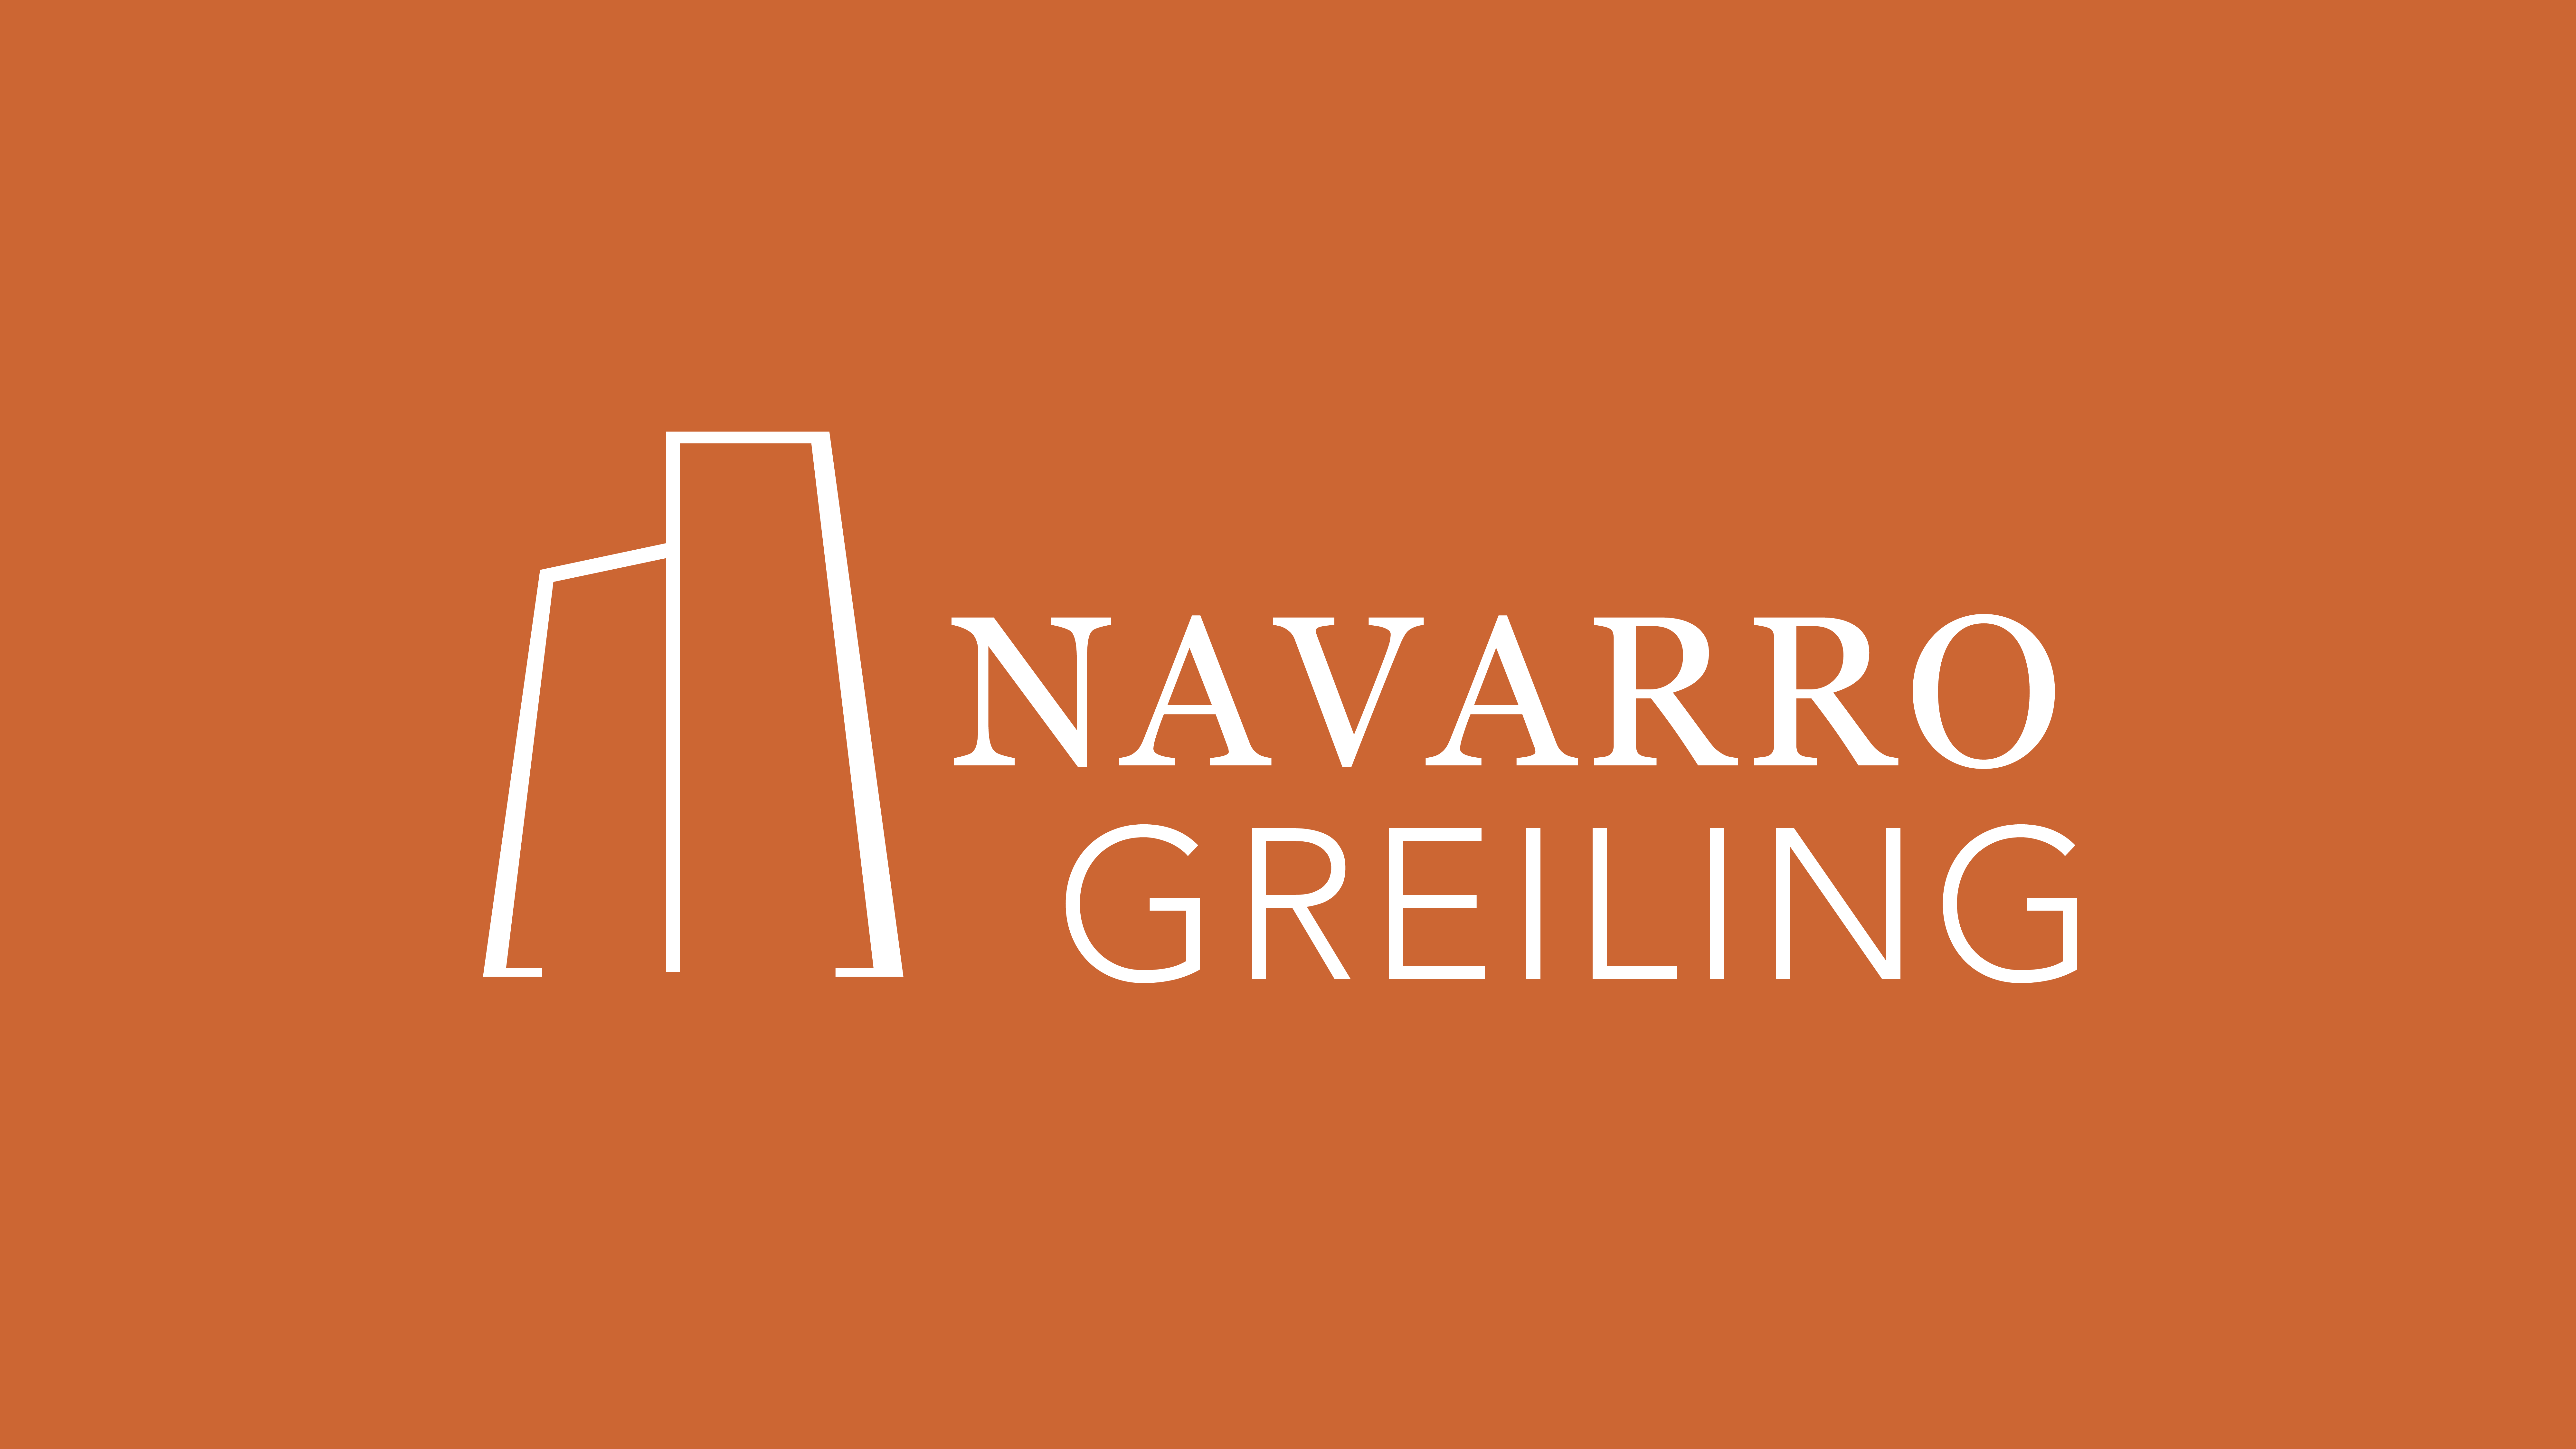 Navarro Greilling